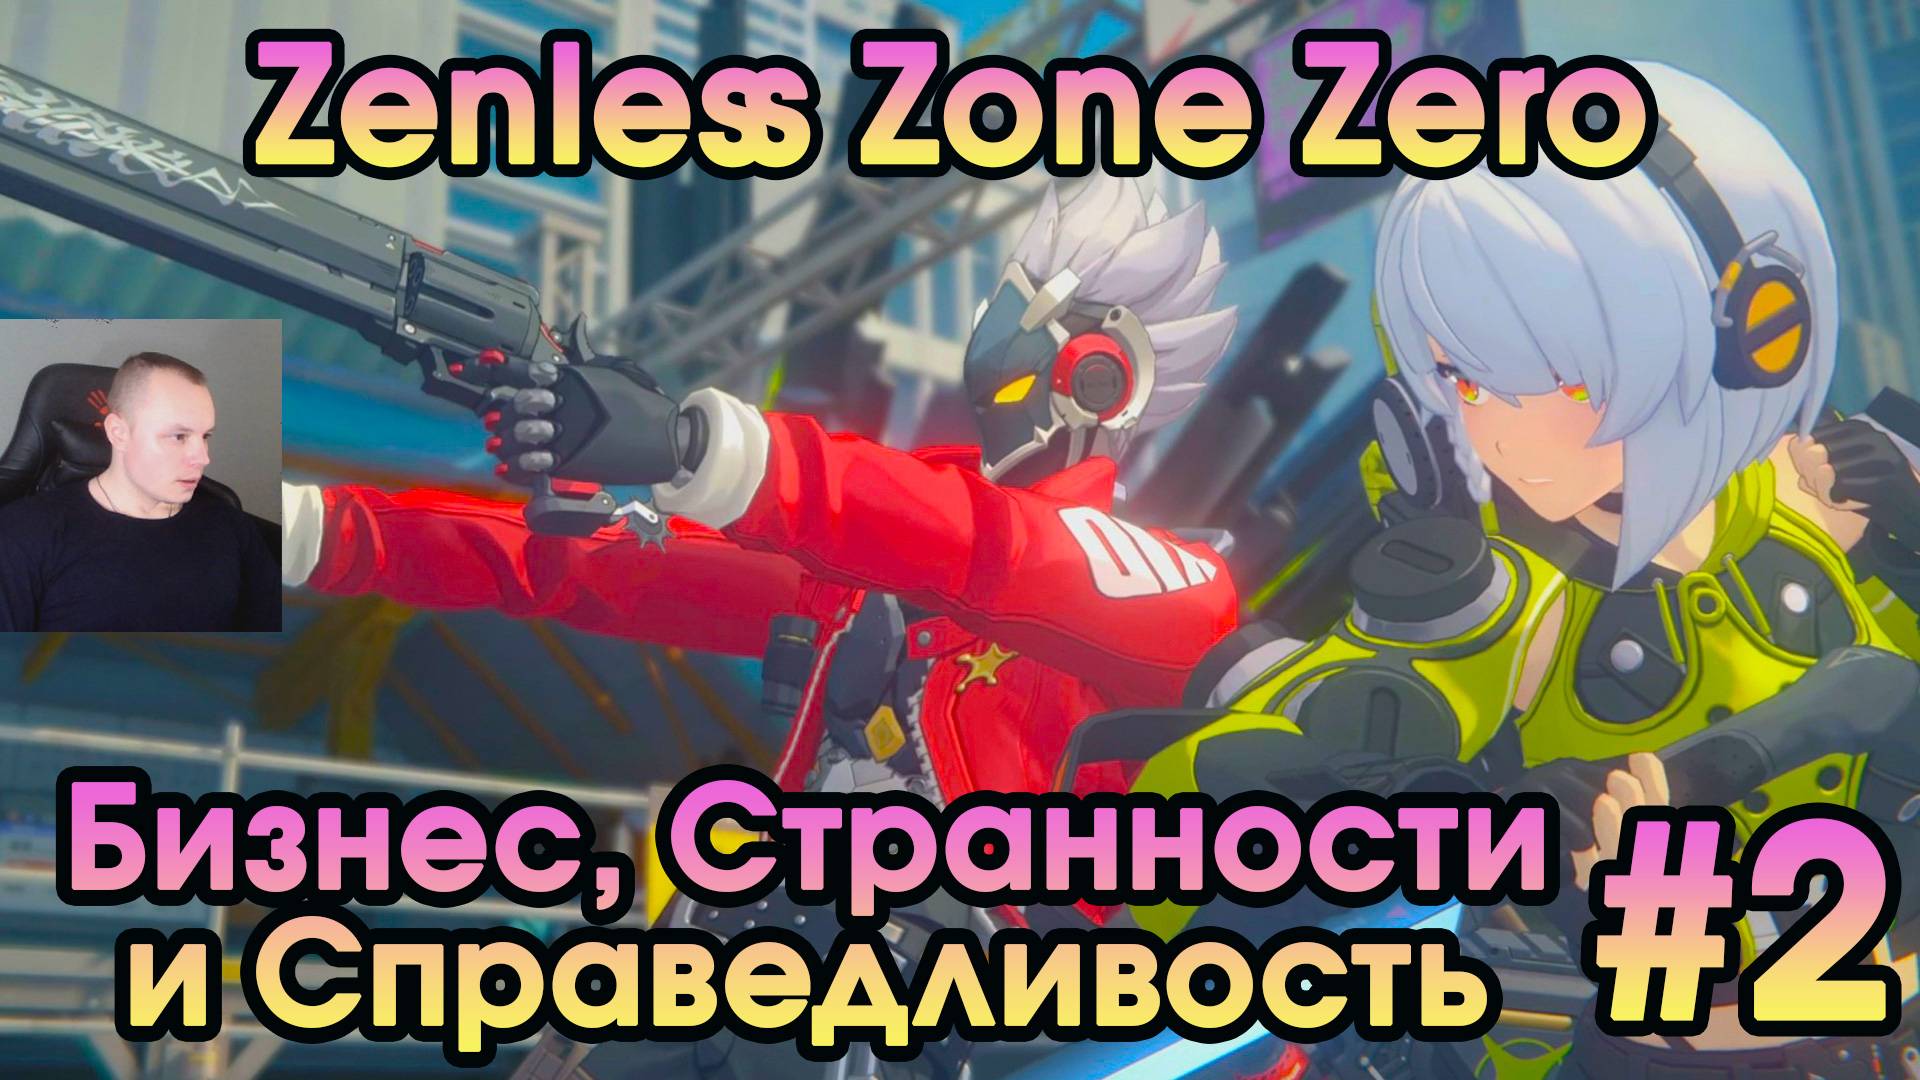 Zenless Zone Zero ➤ Сюжетный заказ «Заяц и прокси» ➤Пролог: Бизнес, Странности и Справедливость ➤ZZZ